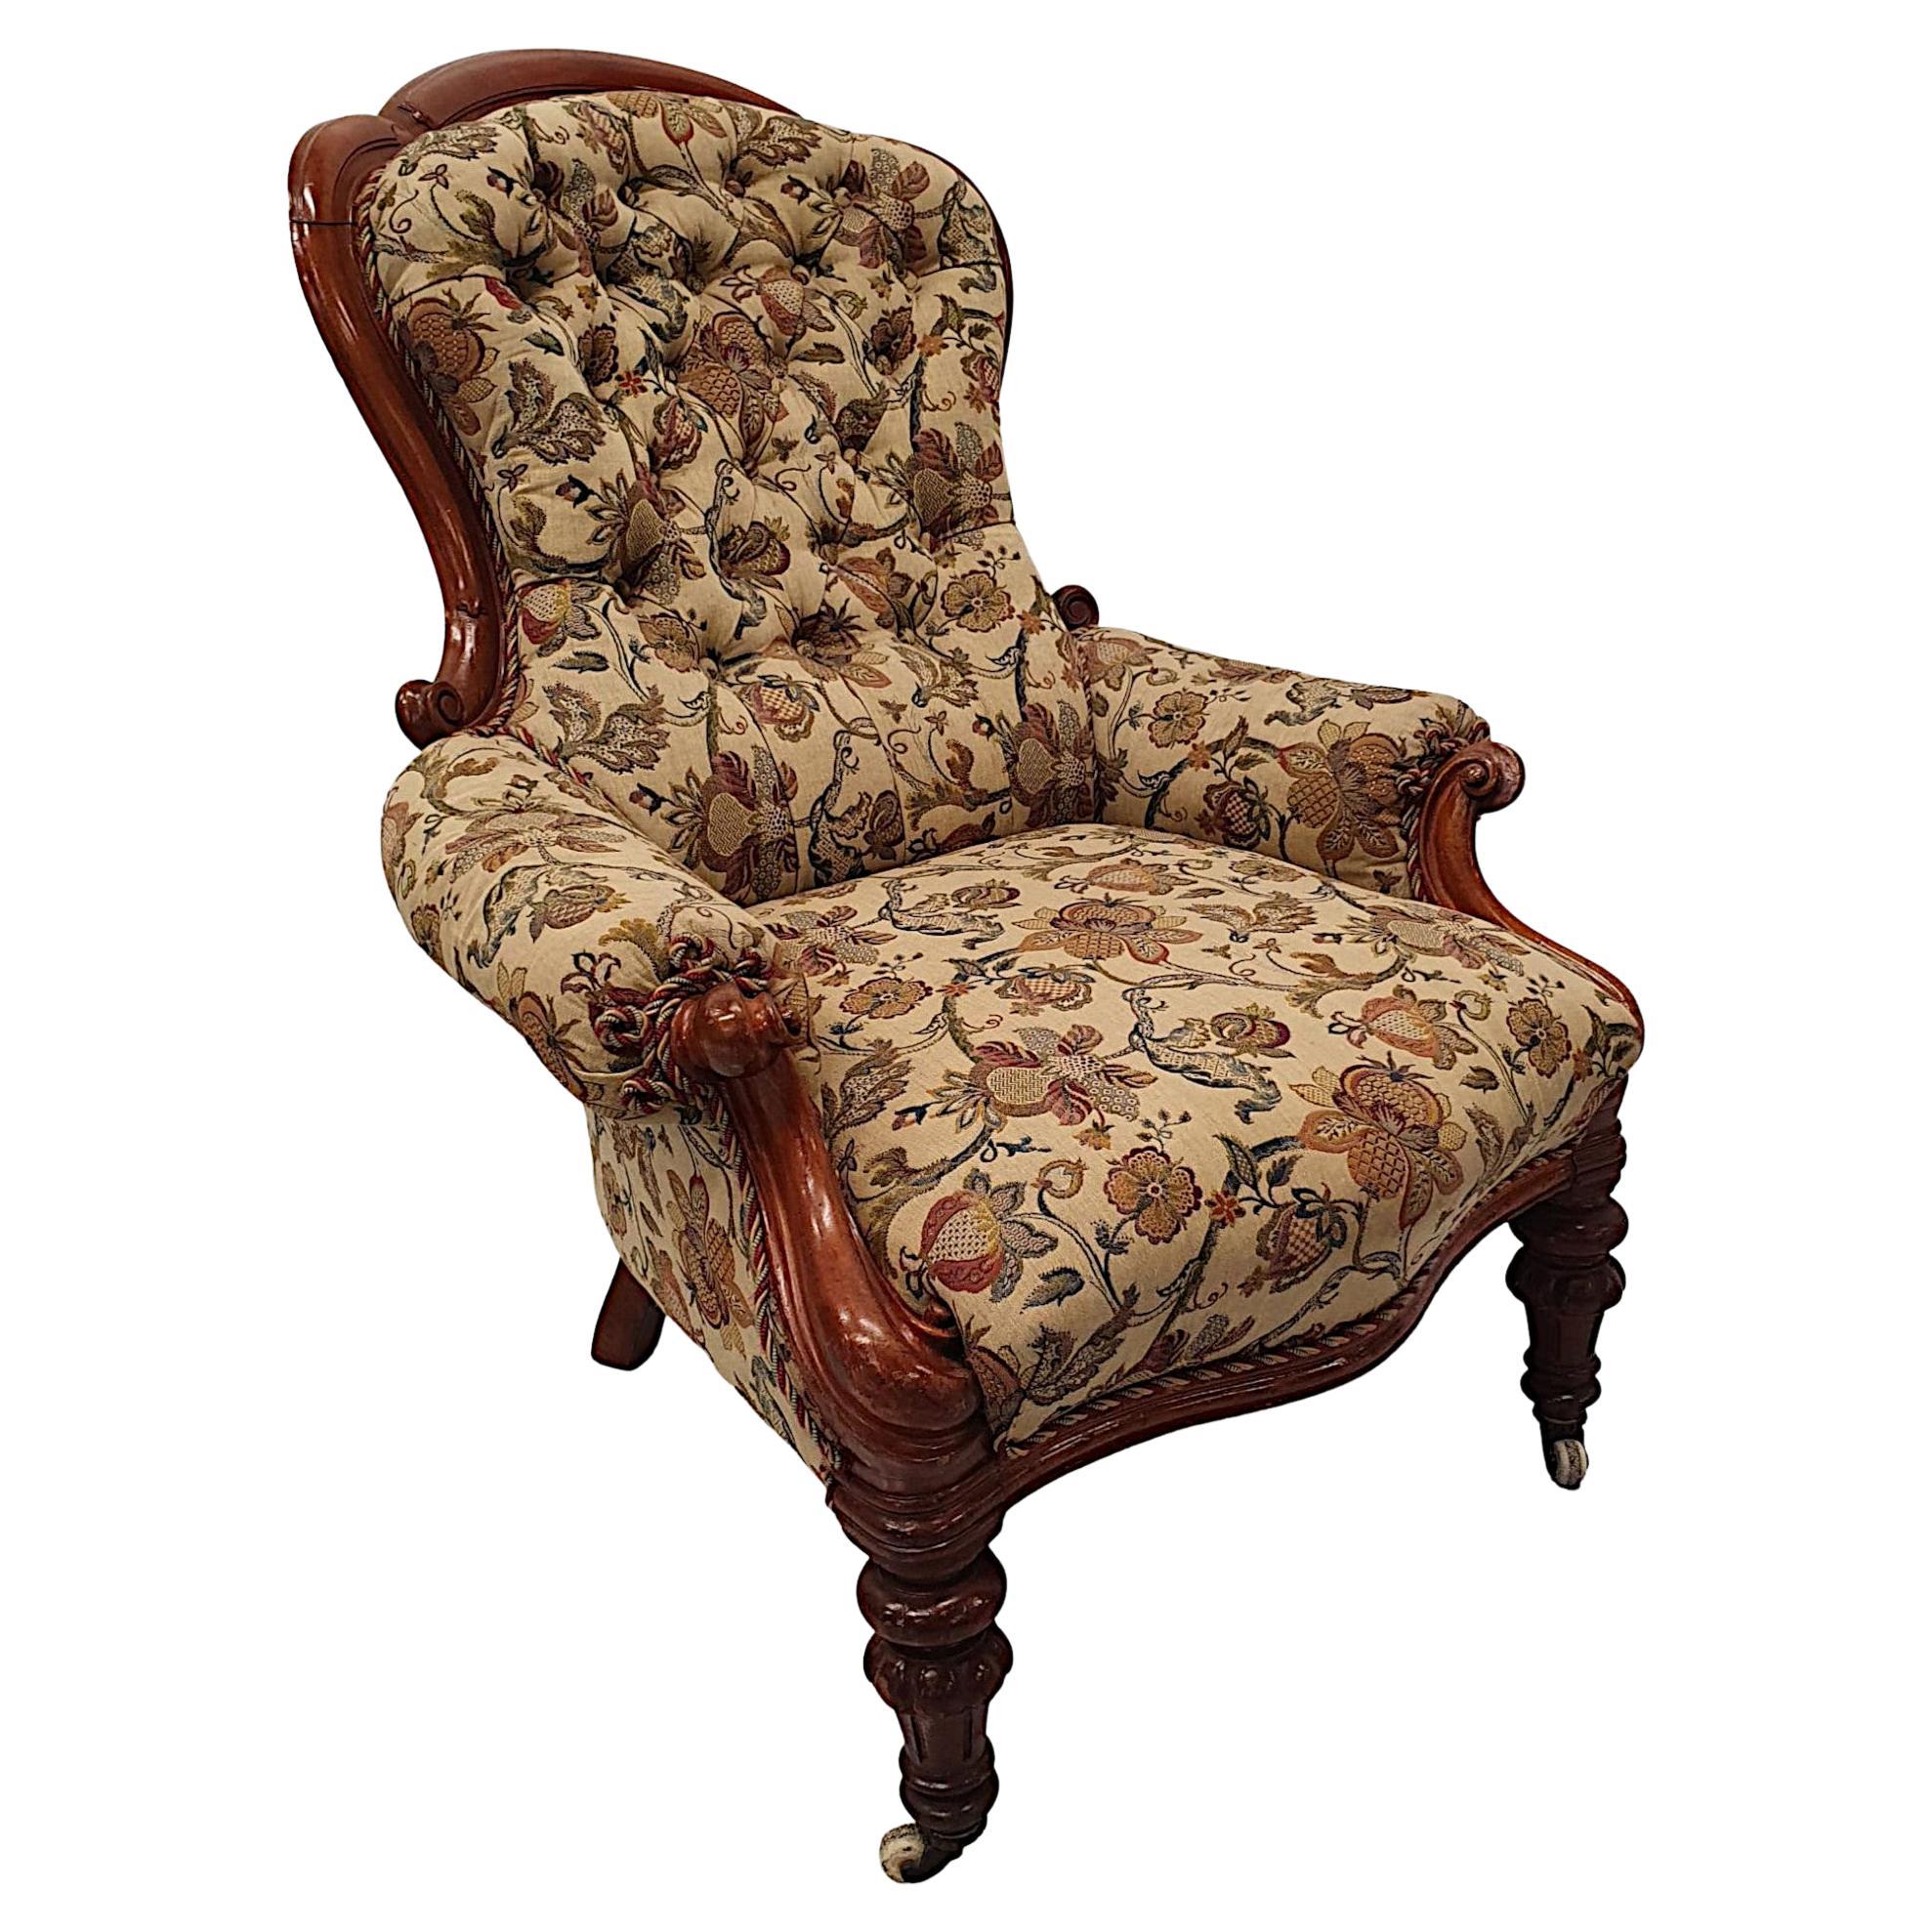 Wunderschöner Sessel aus dem 19. Jahrhundert